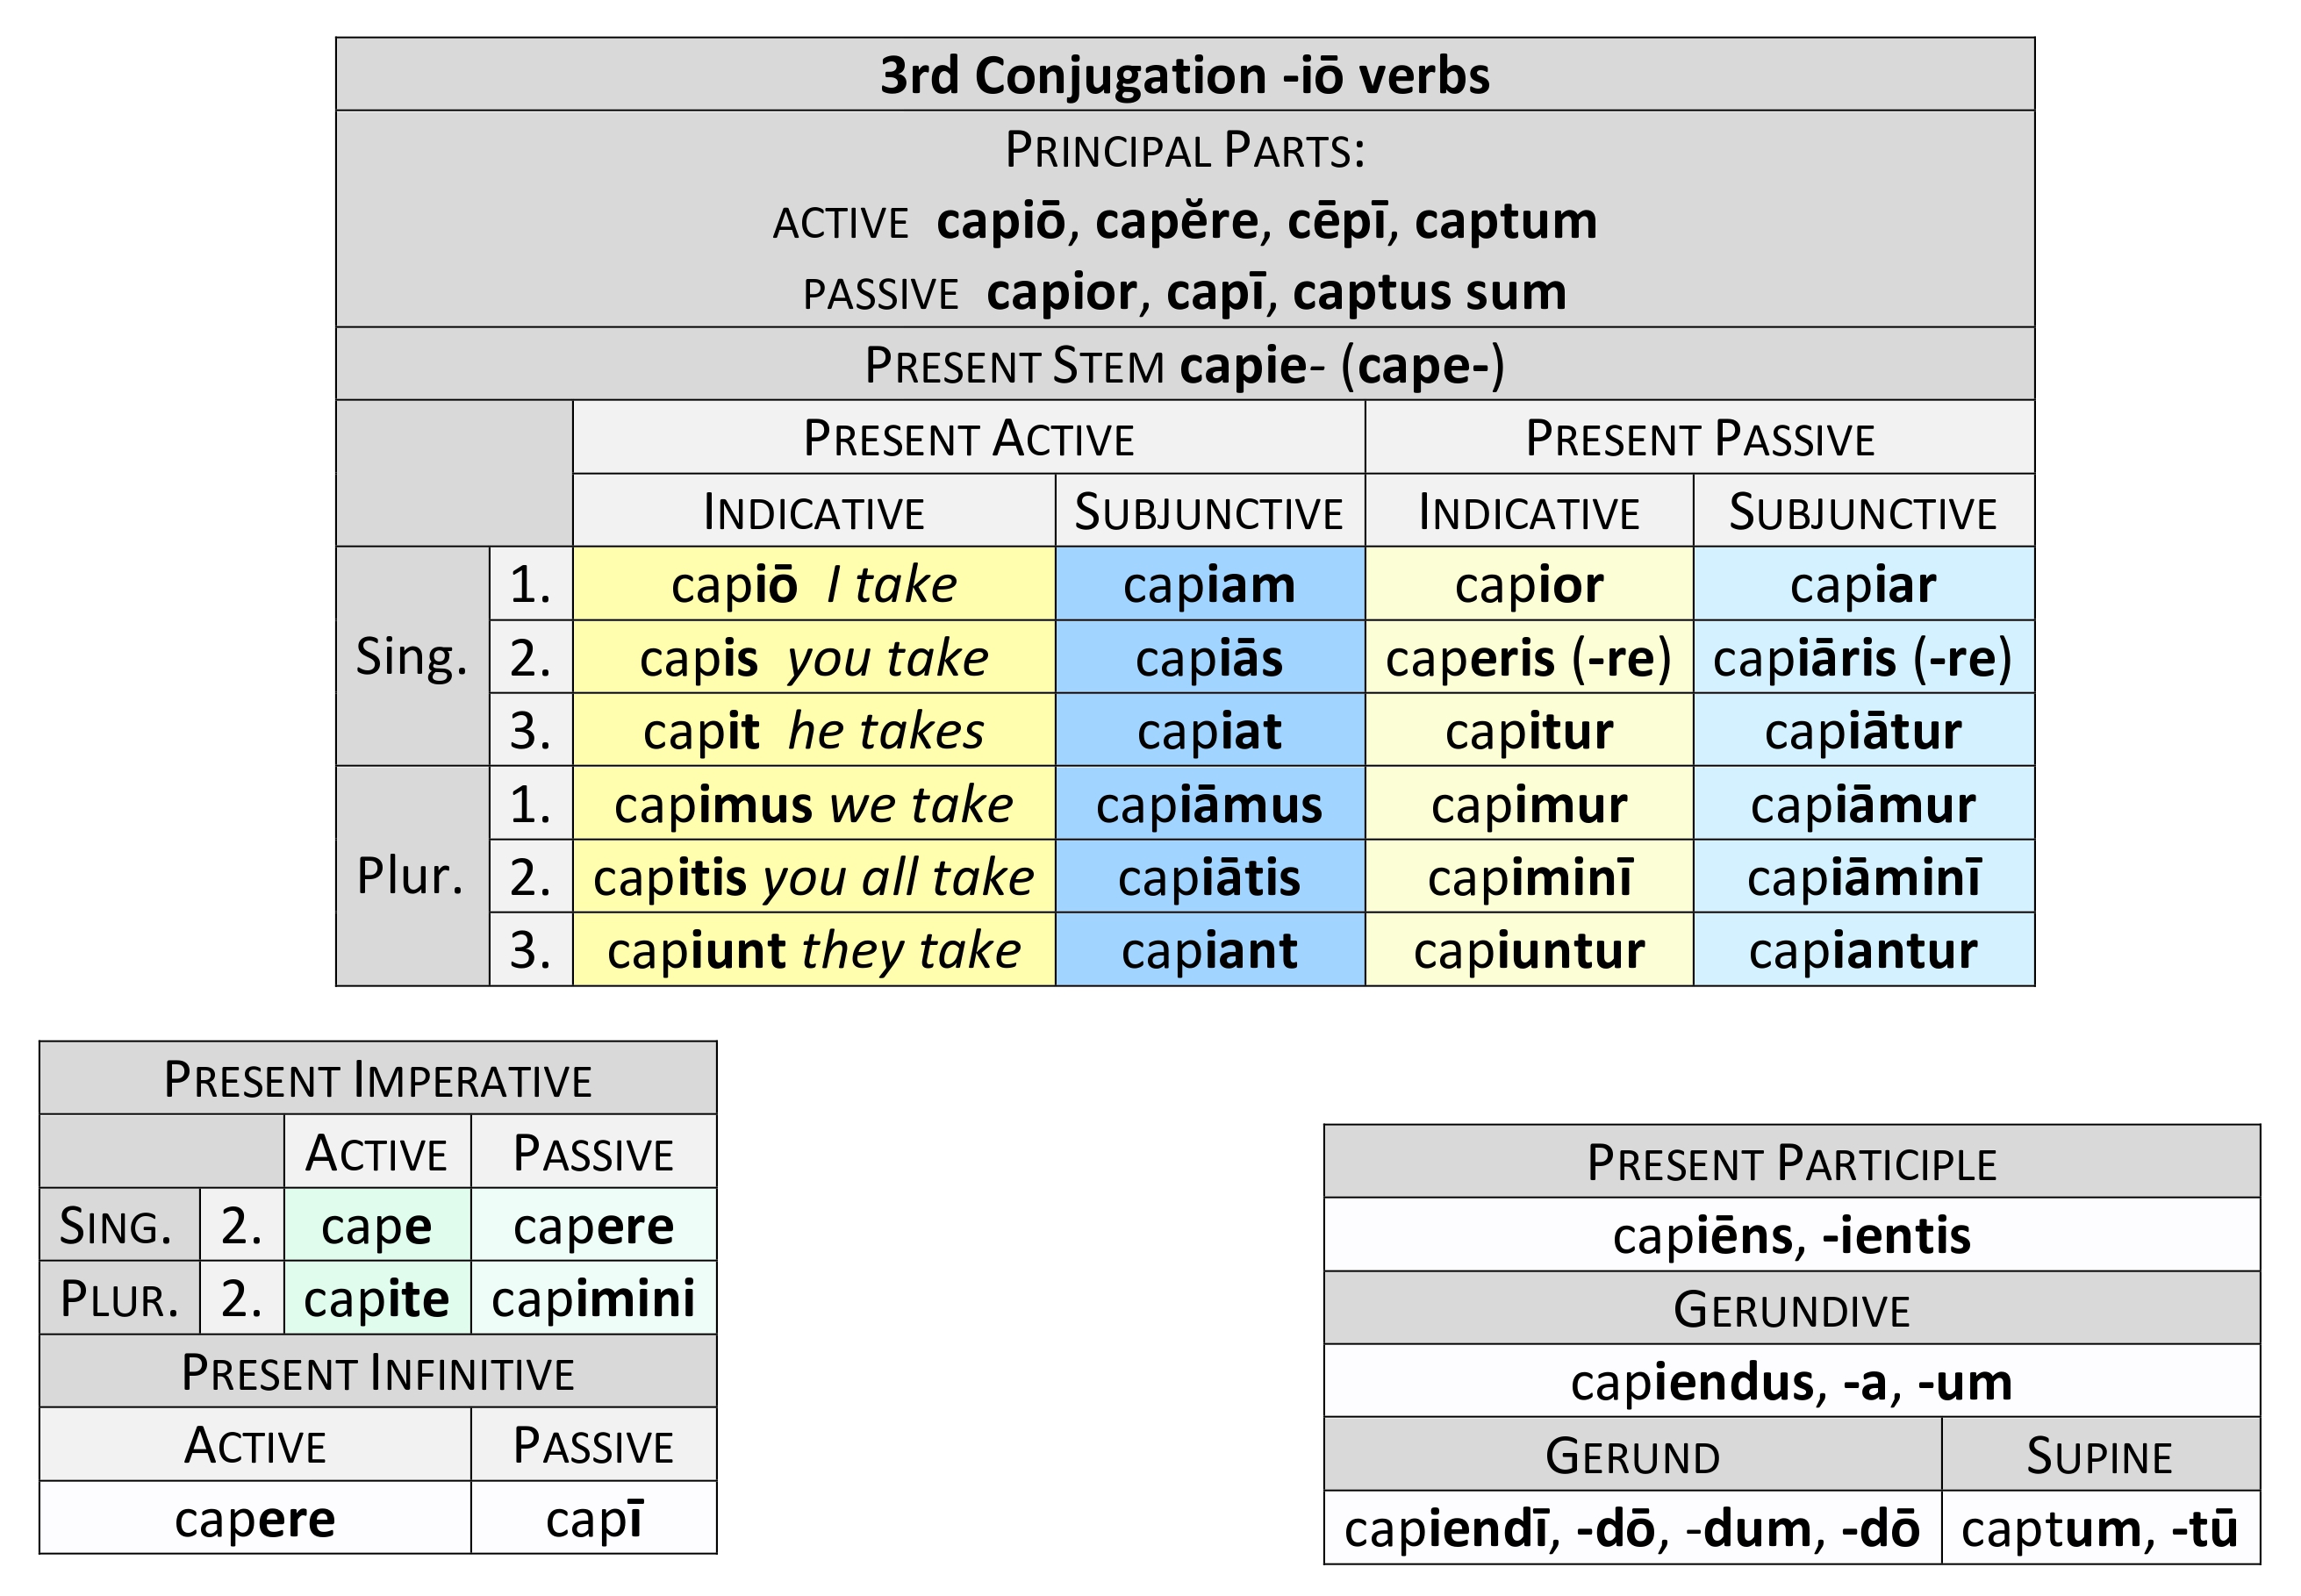 3rd Conjugation in -iō Present paradigm